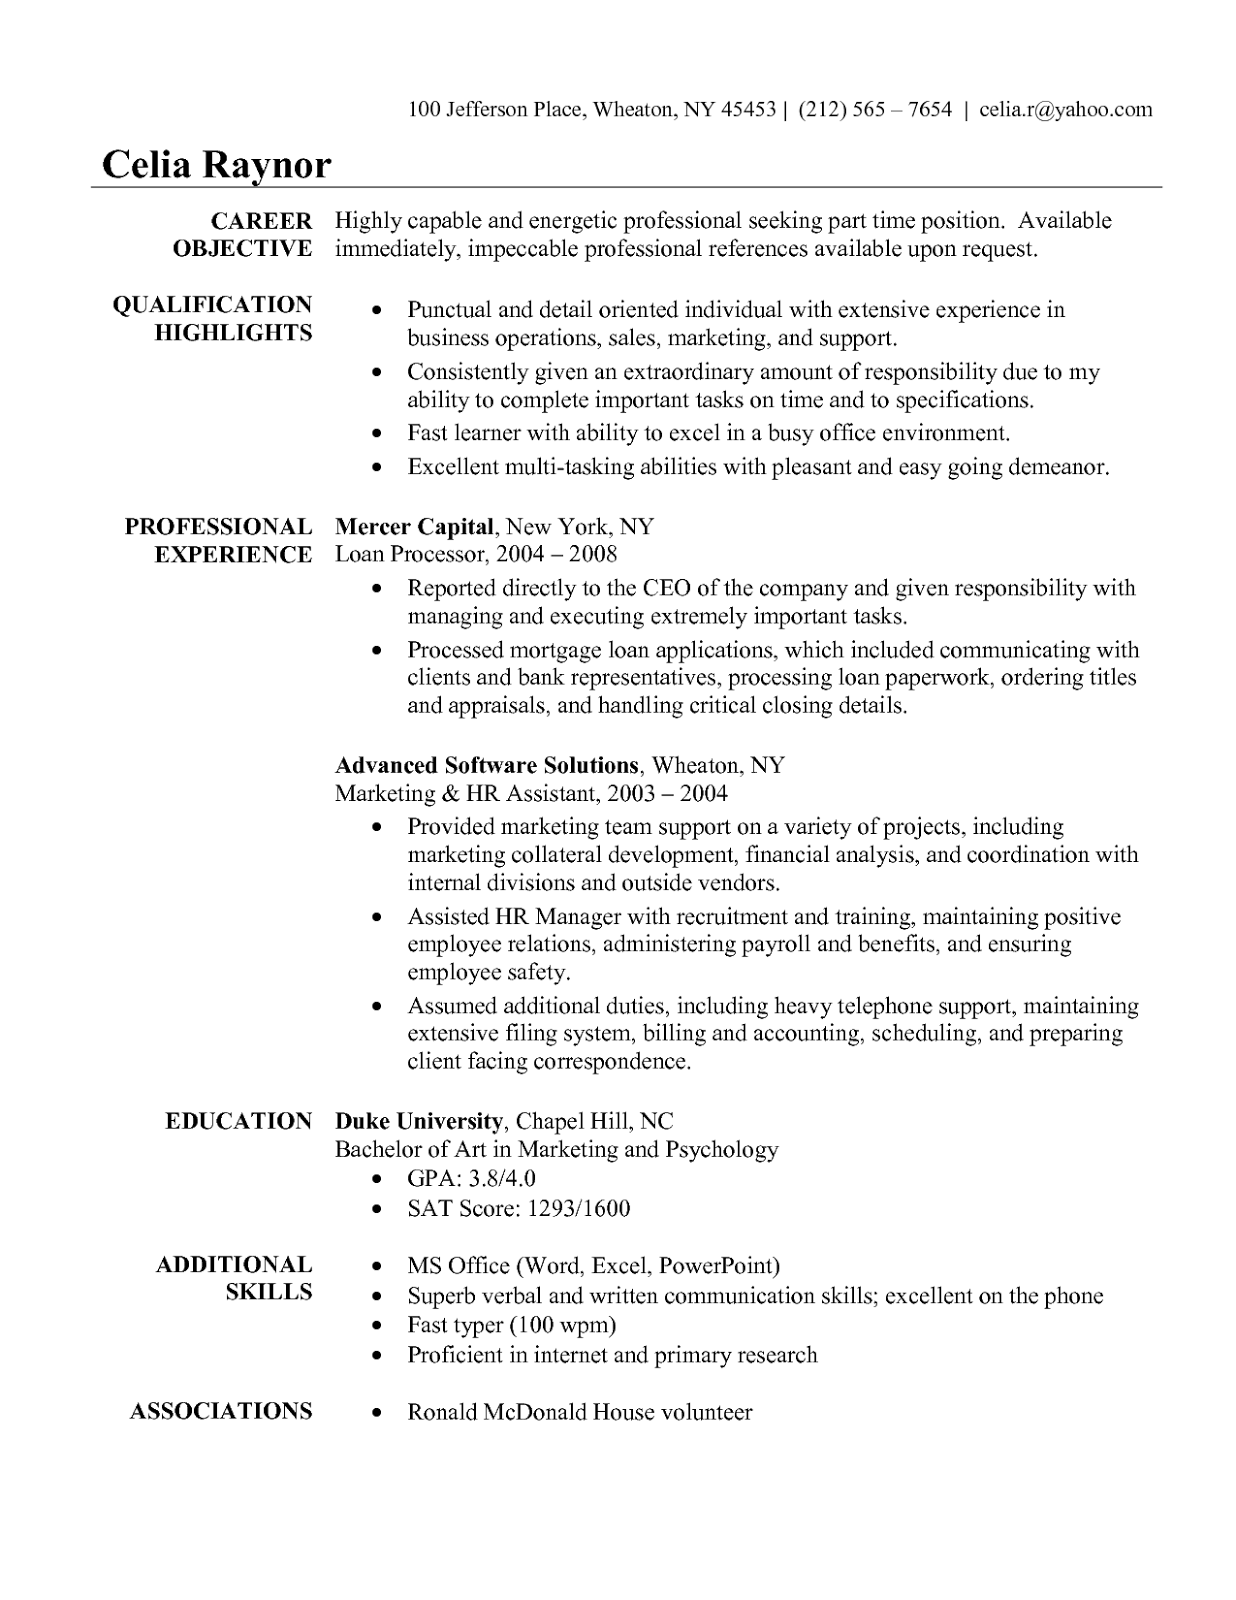 Sample job objectives resume